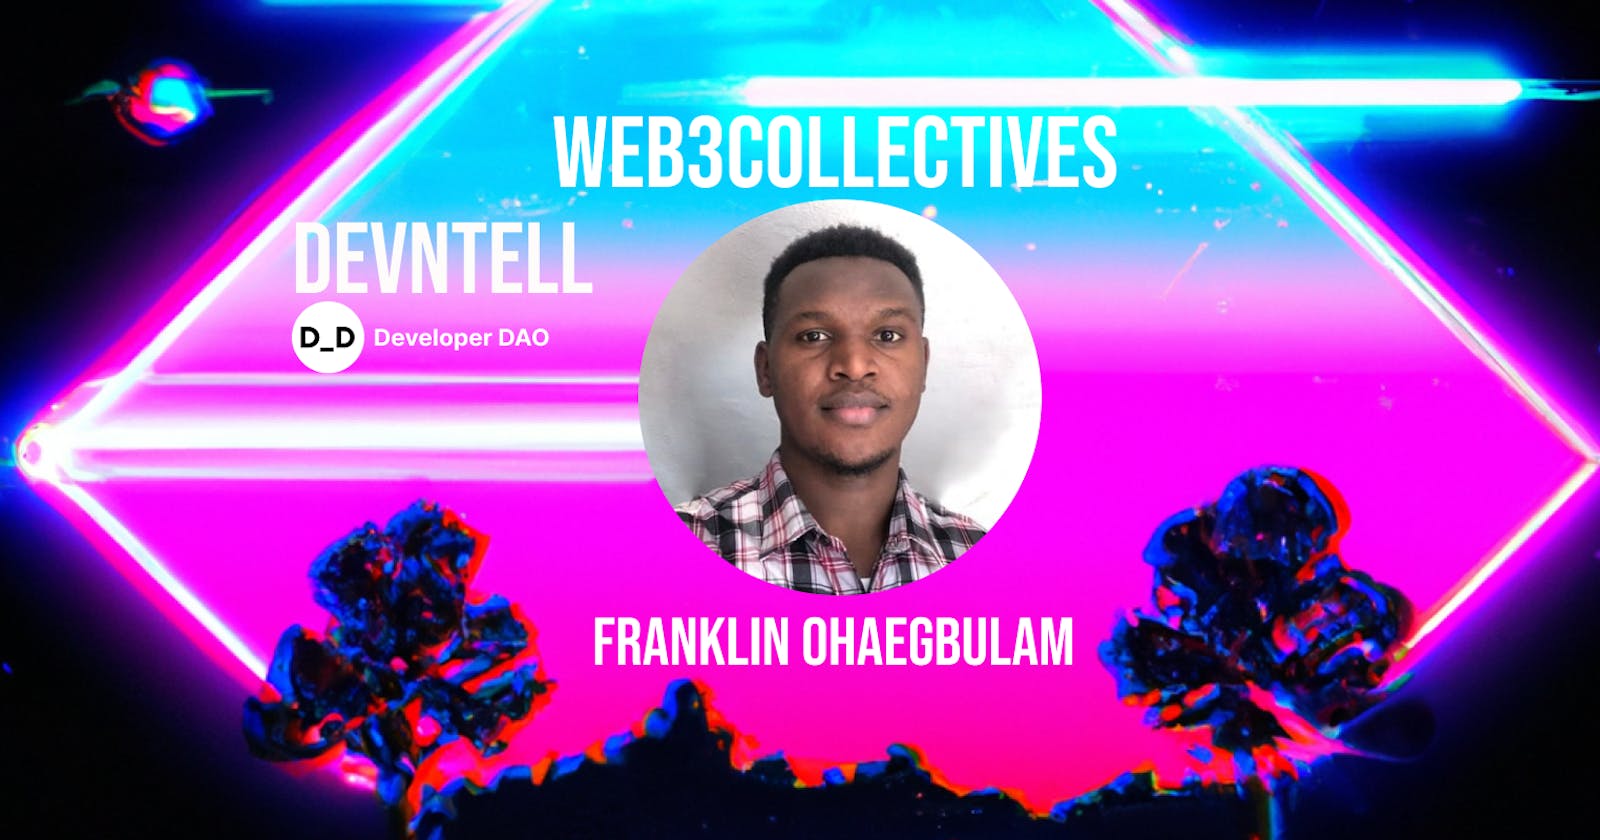 DevNTell - web3collectives